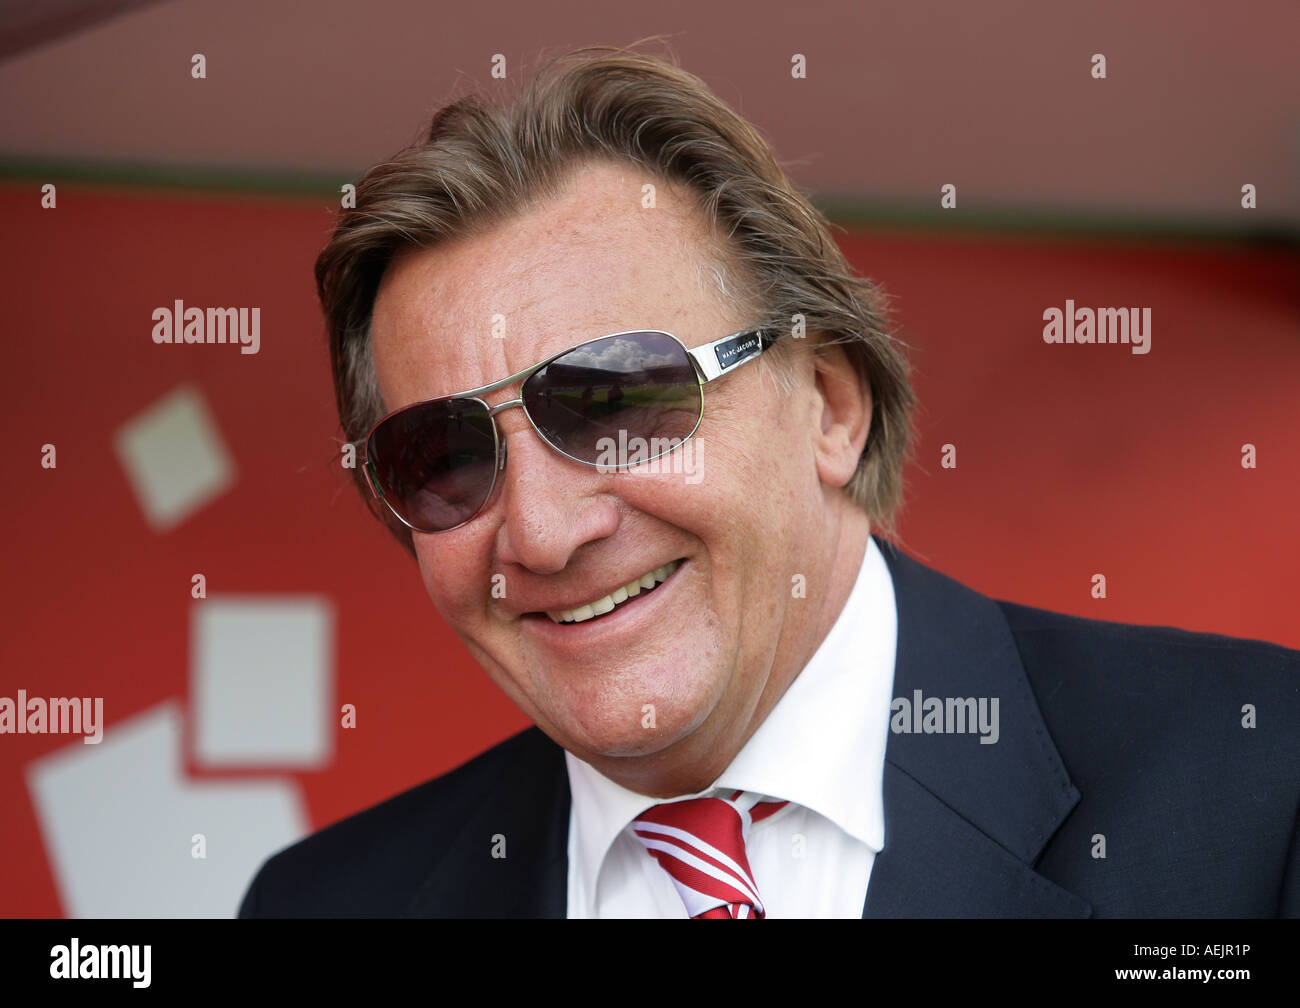 President of the german soccer club Mainz 05, Harald Strutz, Stock Photo